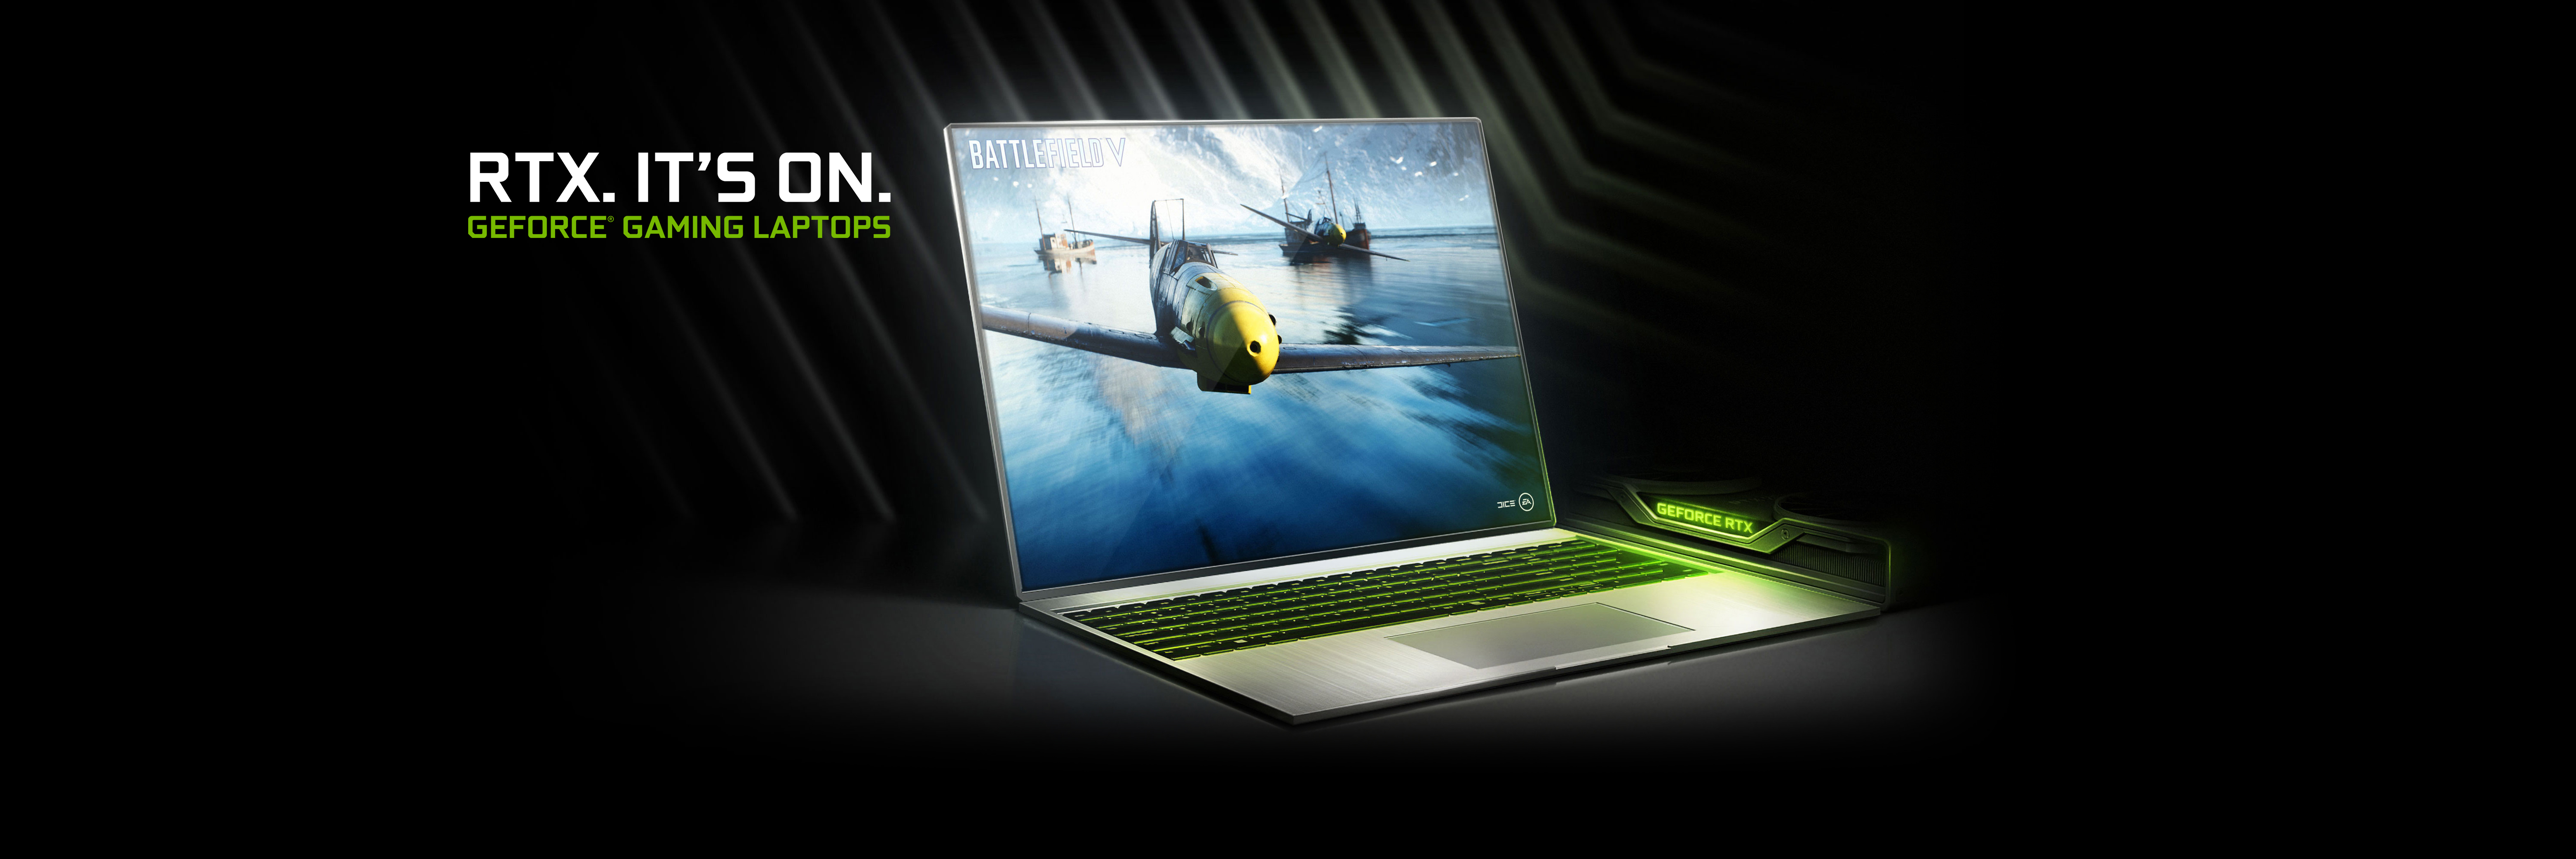 RTX Gaming Laptops | NVIDIA